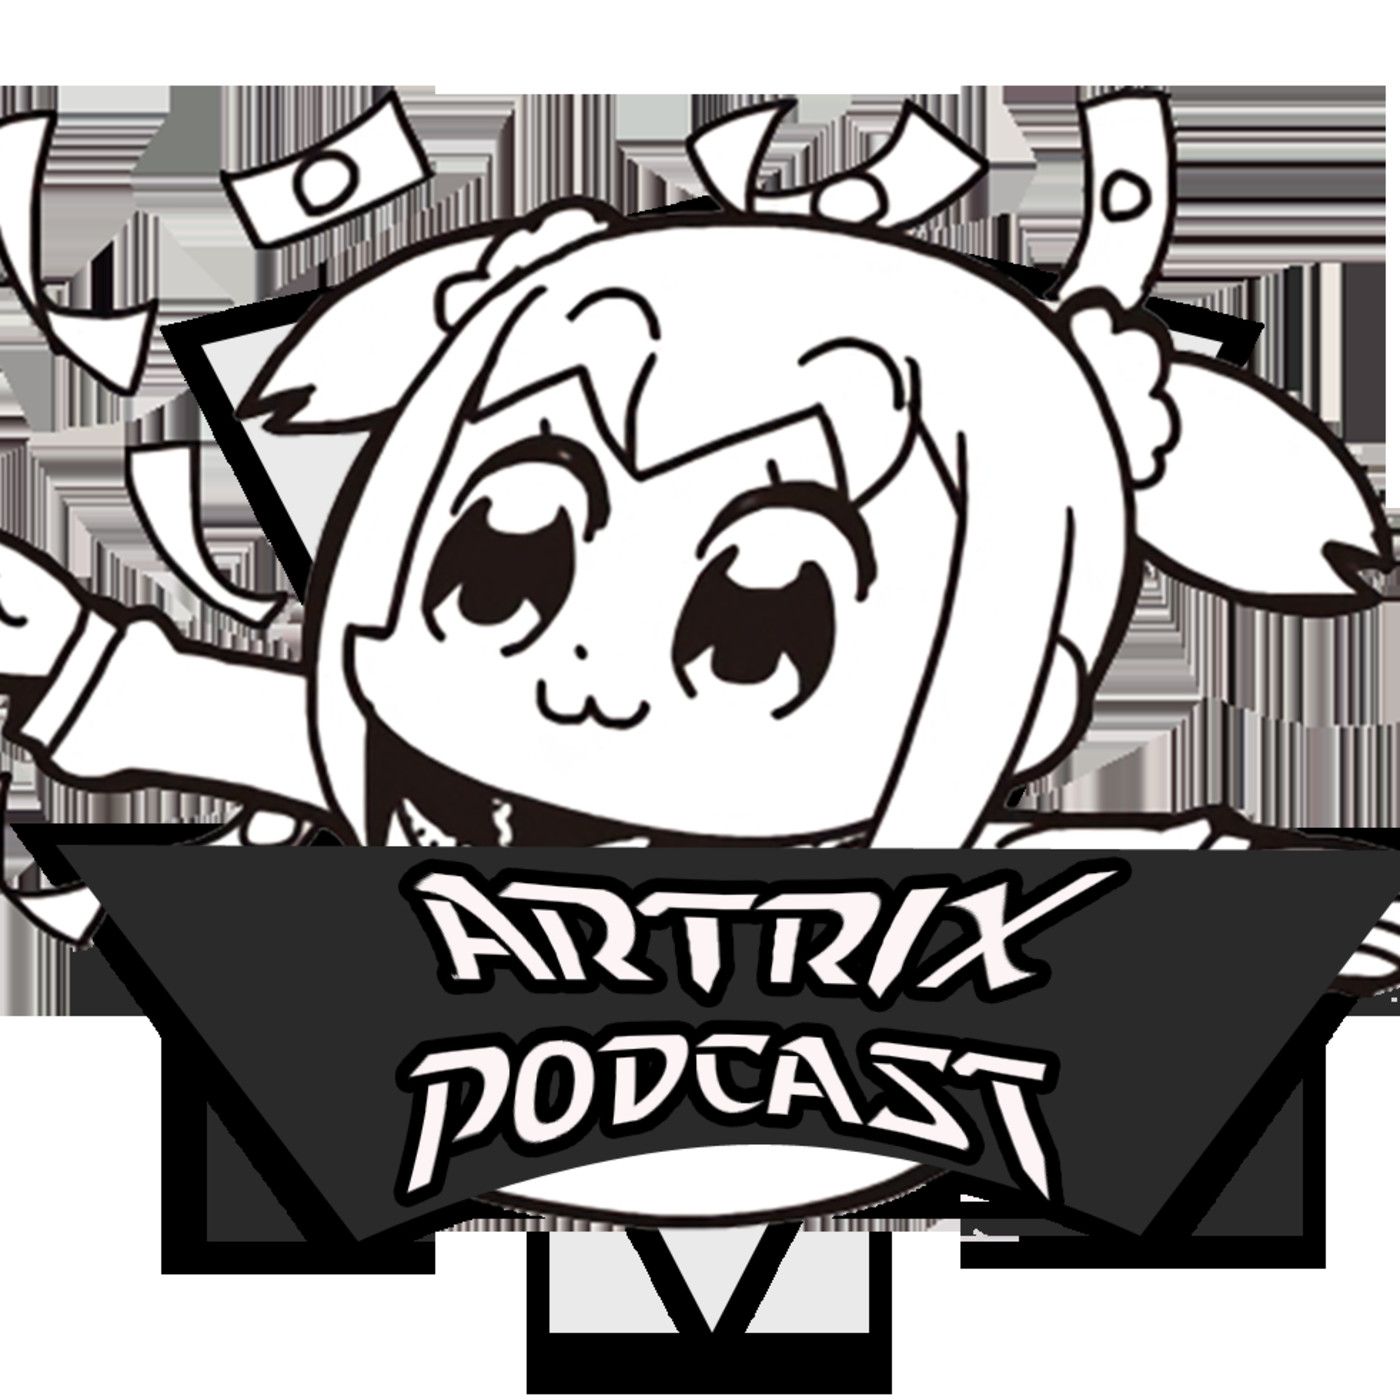 Artrix Podcast